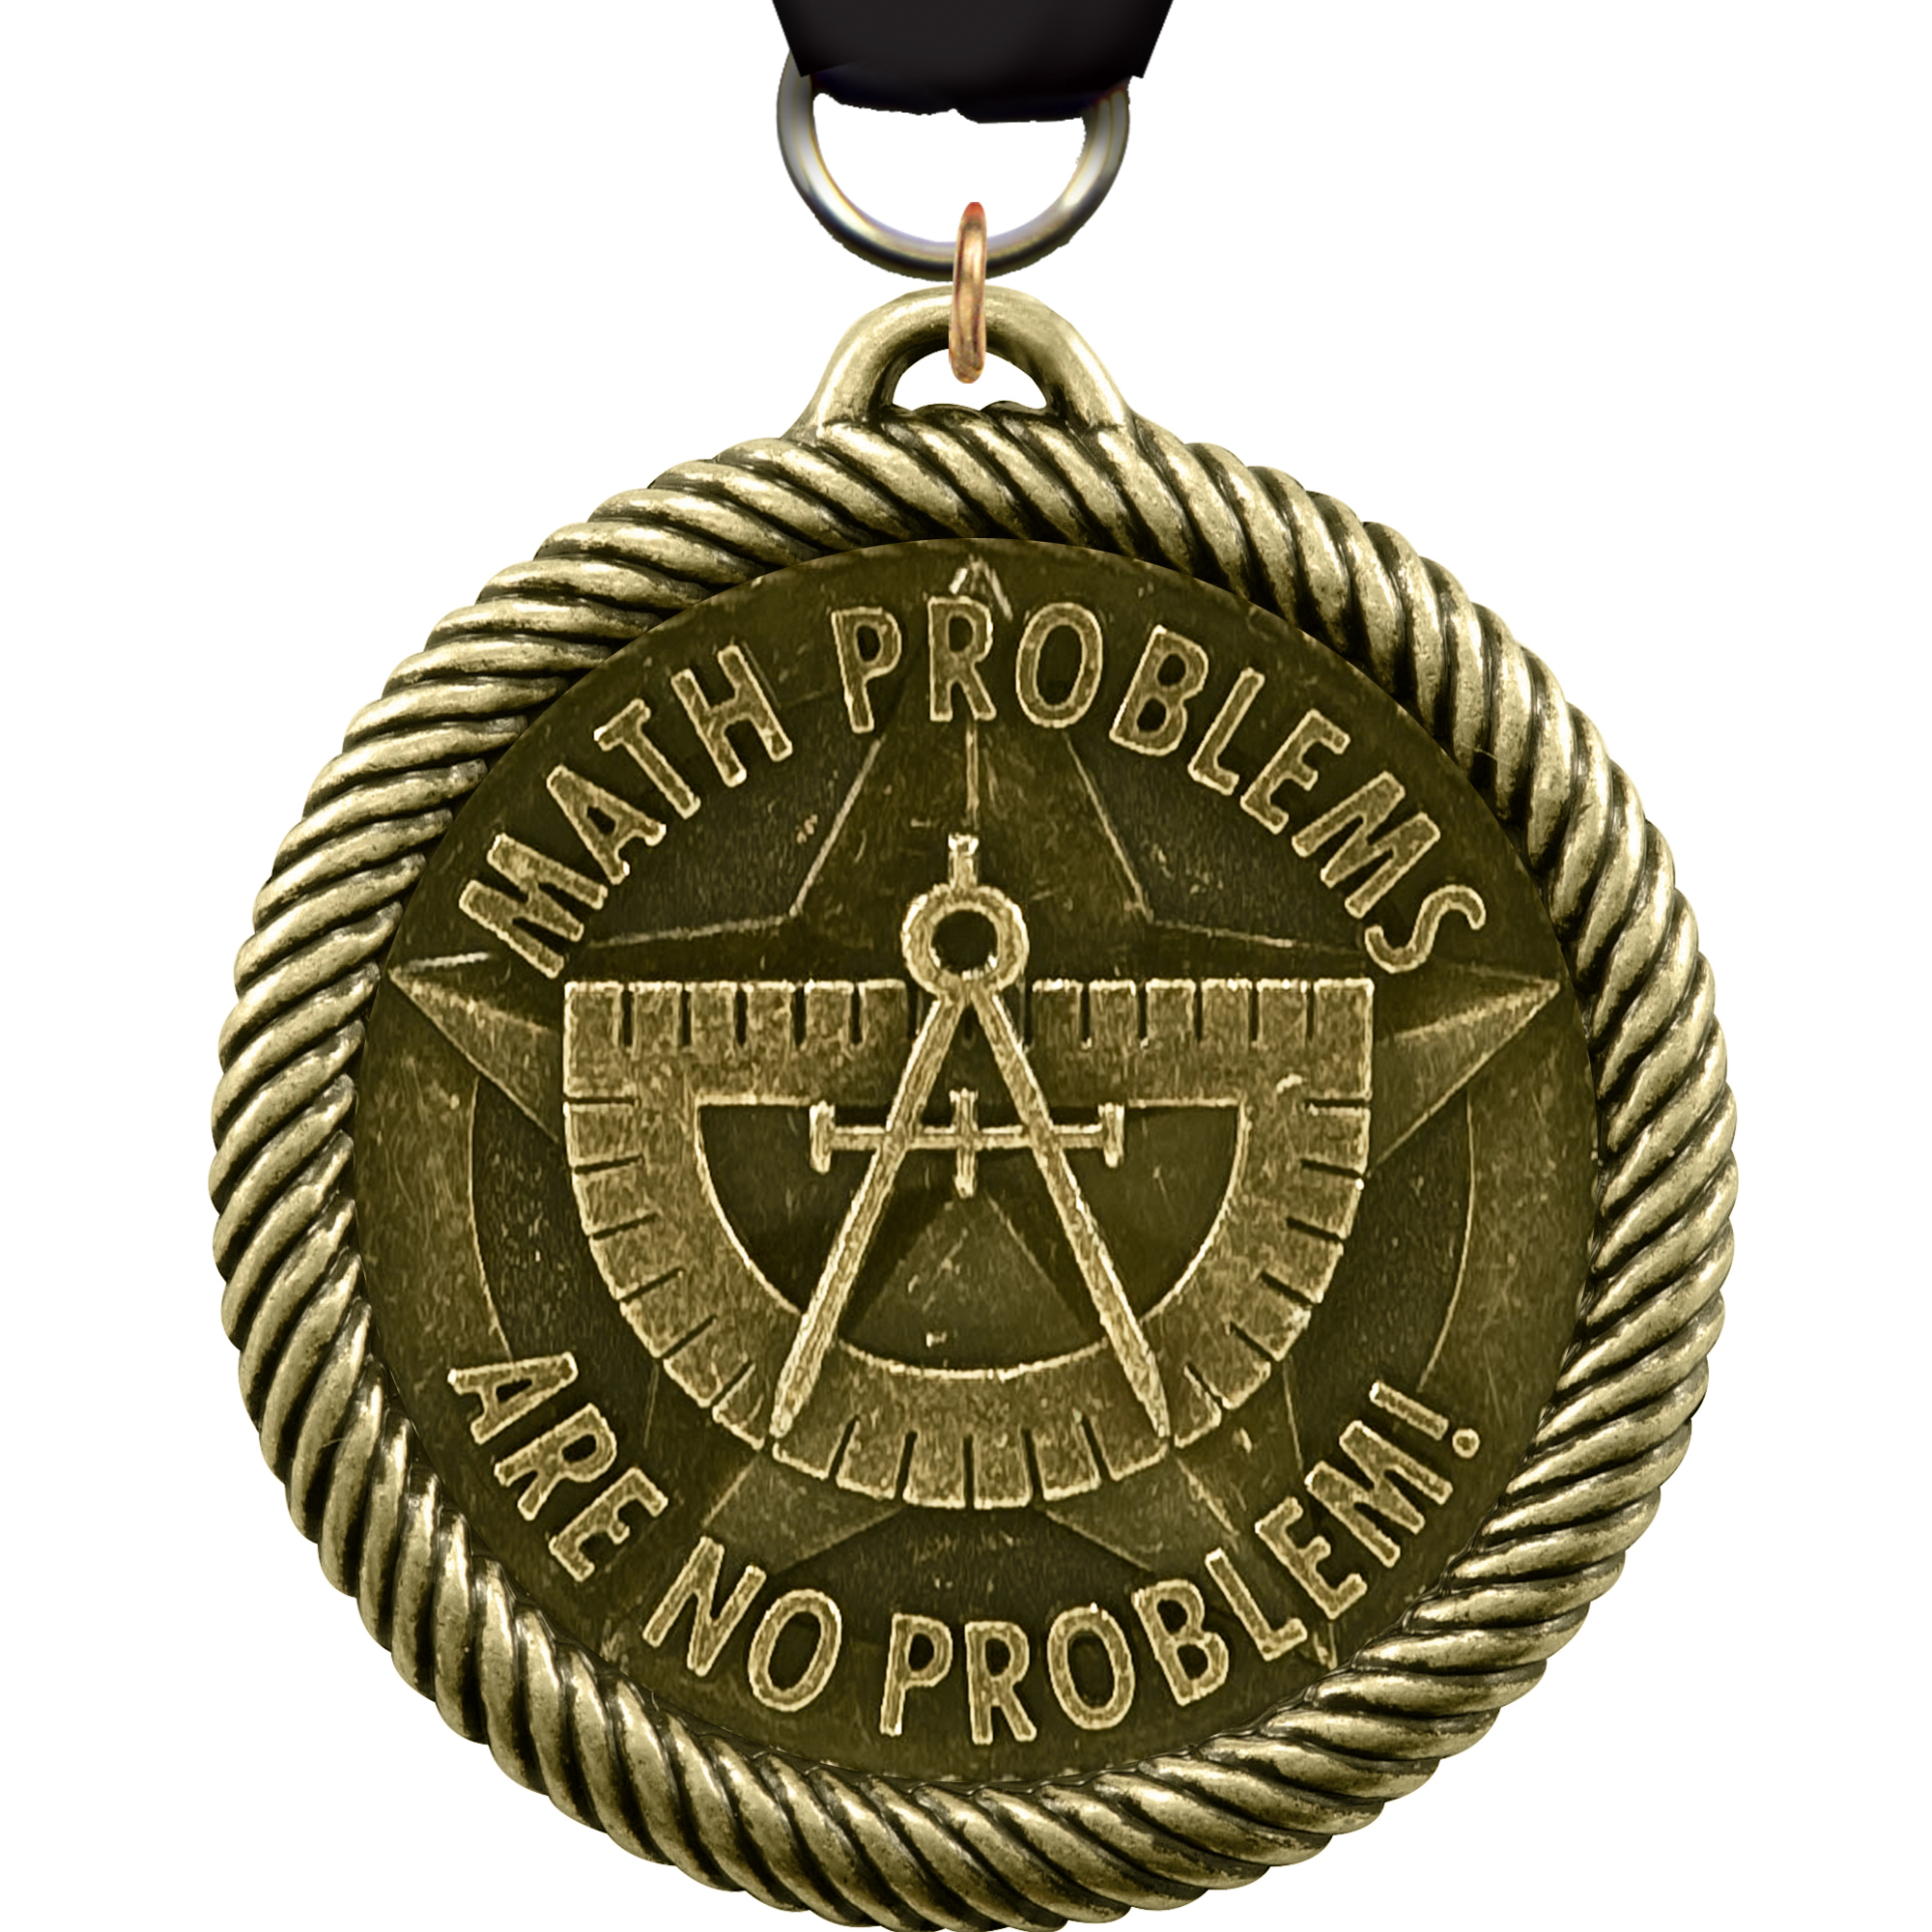 Math Problems Are No Problem! Scholastic Medal